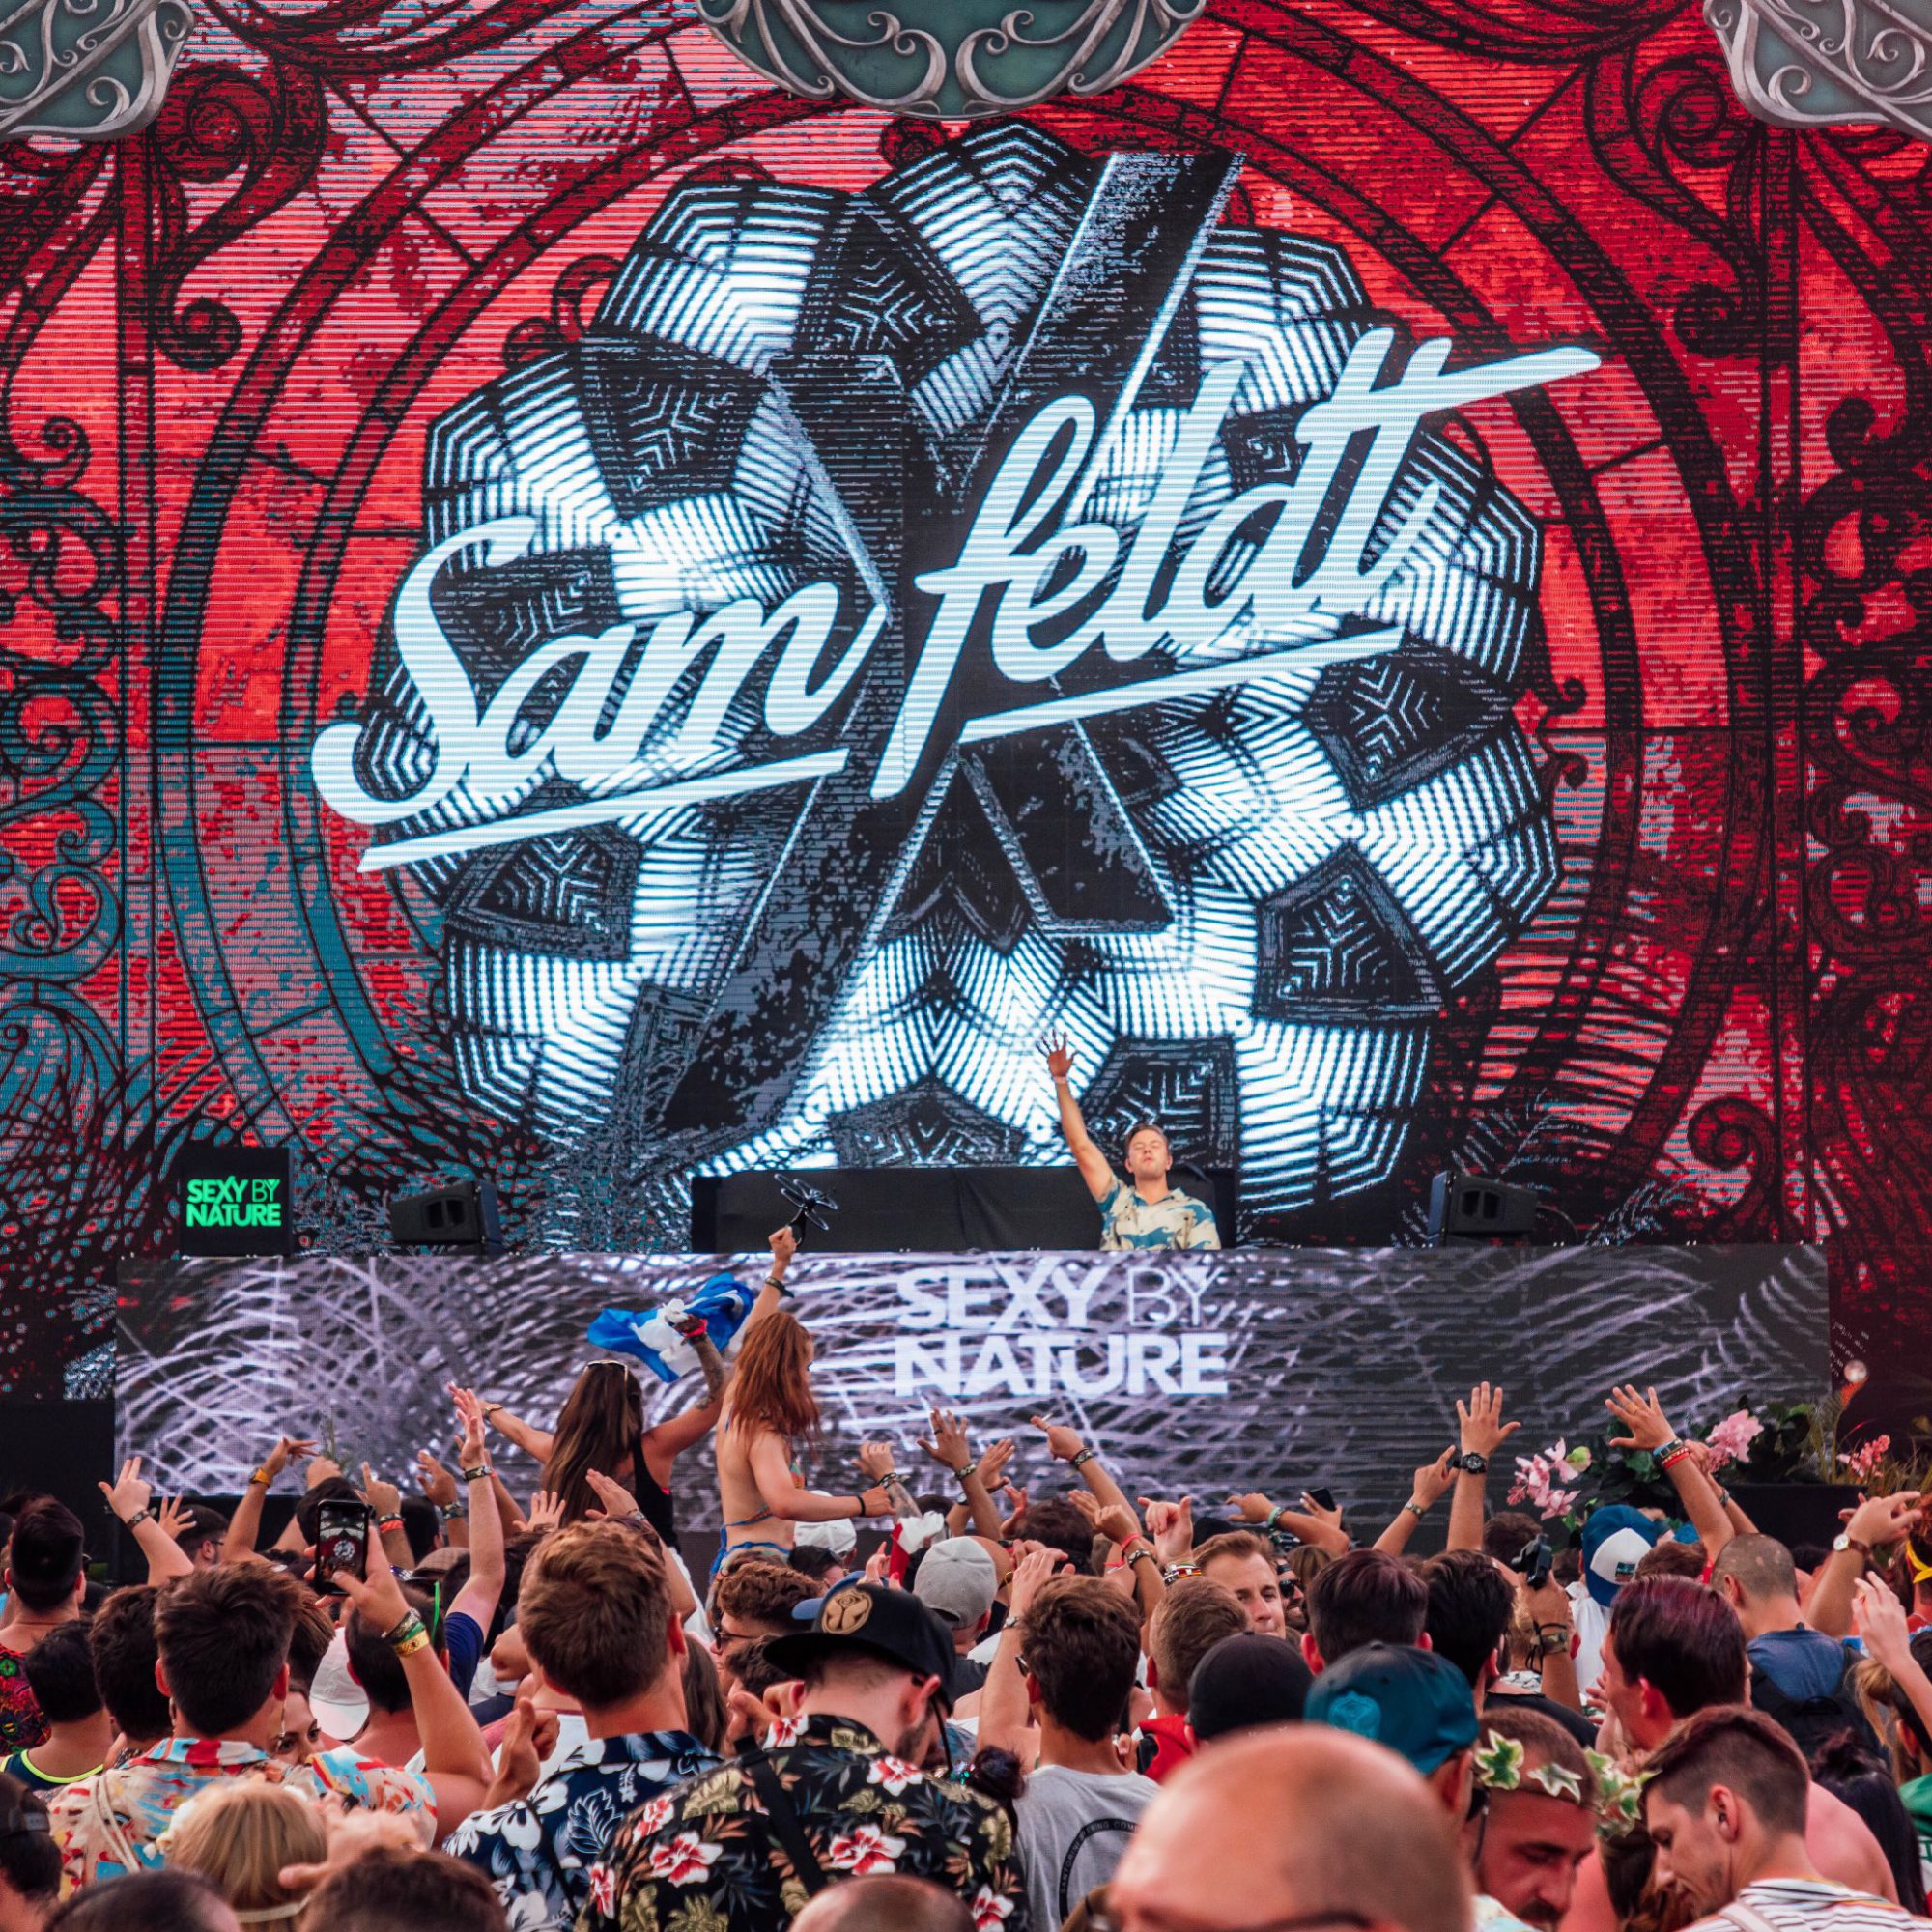 Sam Feldt at Tomorrowland 2019